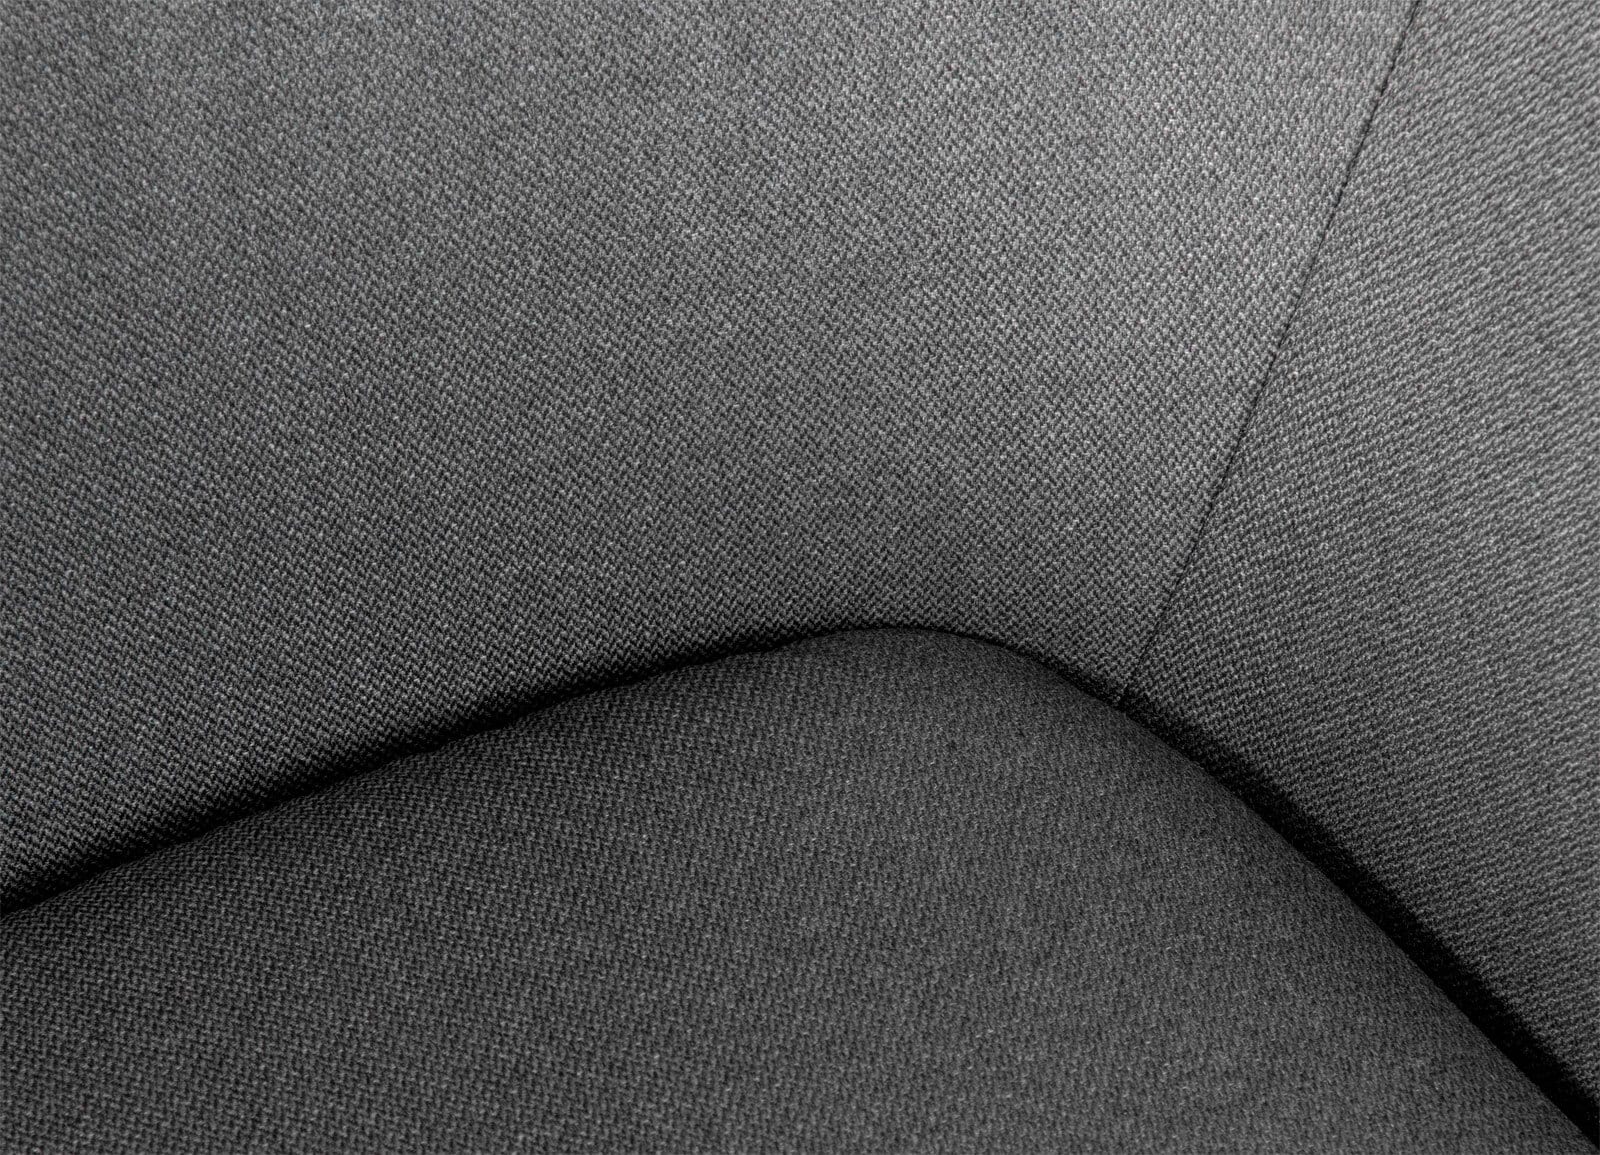 CASAVANTI Drehstuhl CLAAS grau/schwarz 63 x 83,5-91 x 61,5 cm